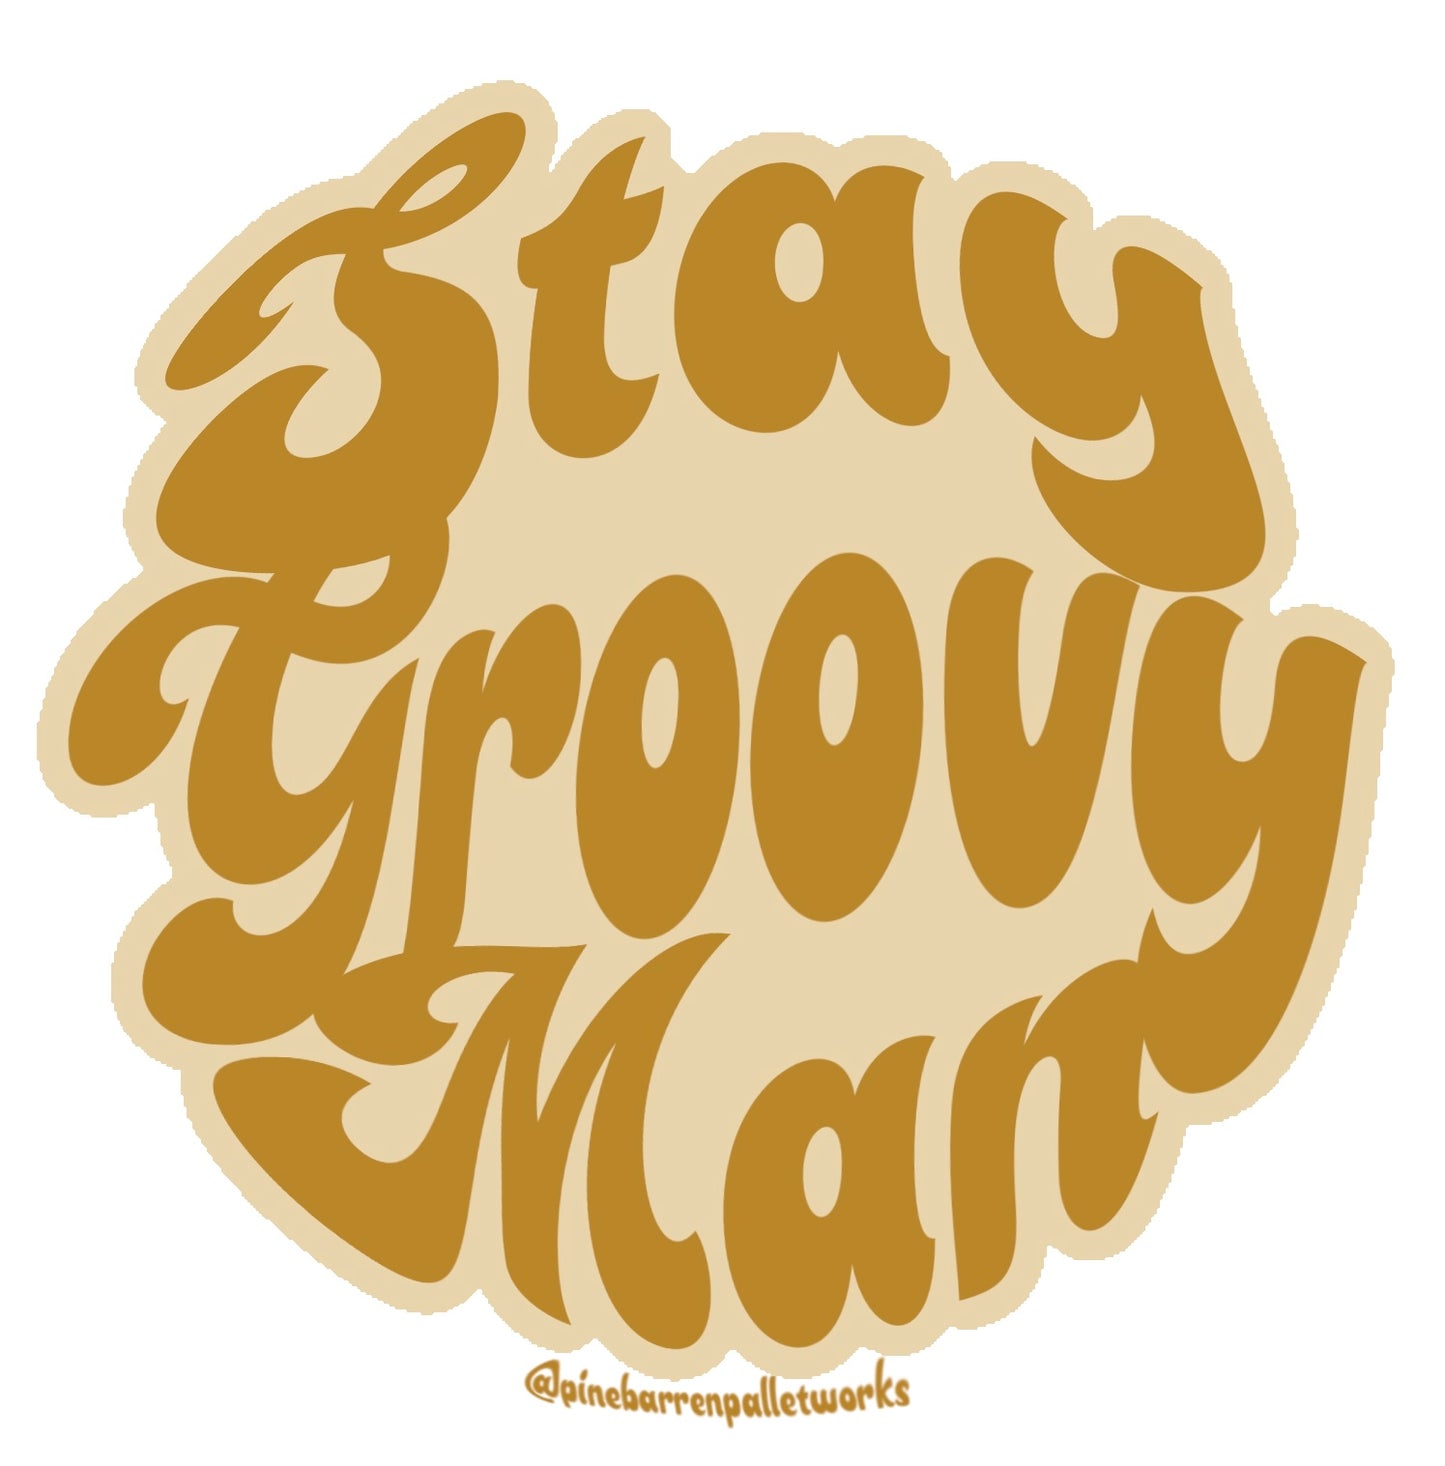 Stay Groovy Man Sticker